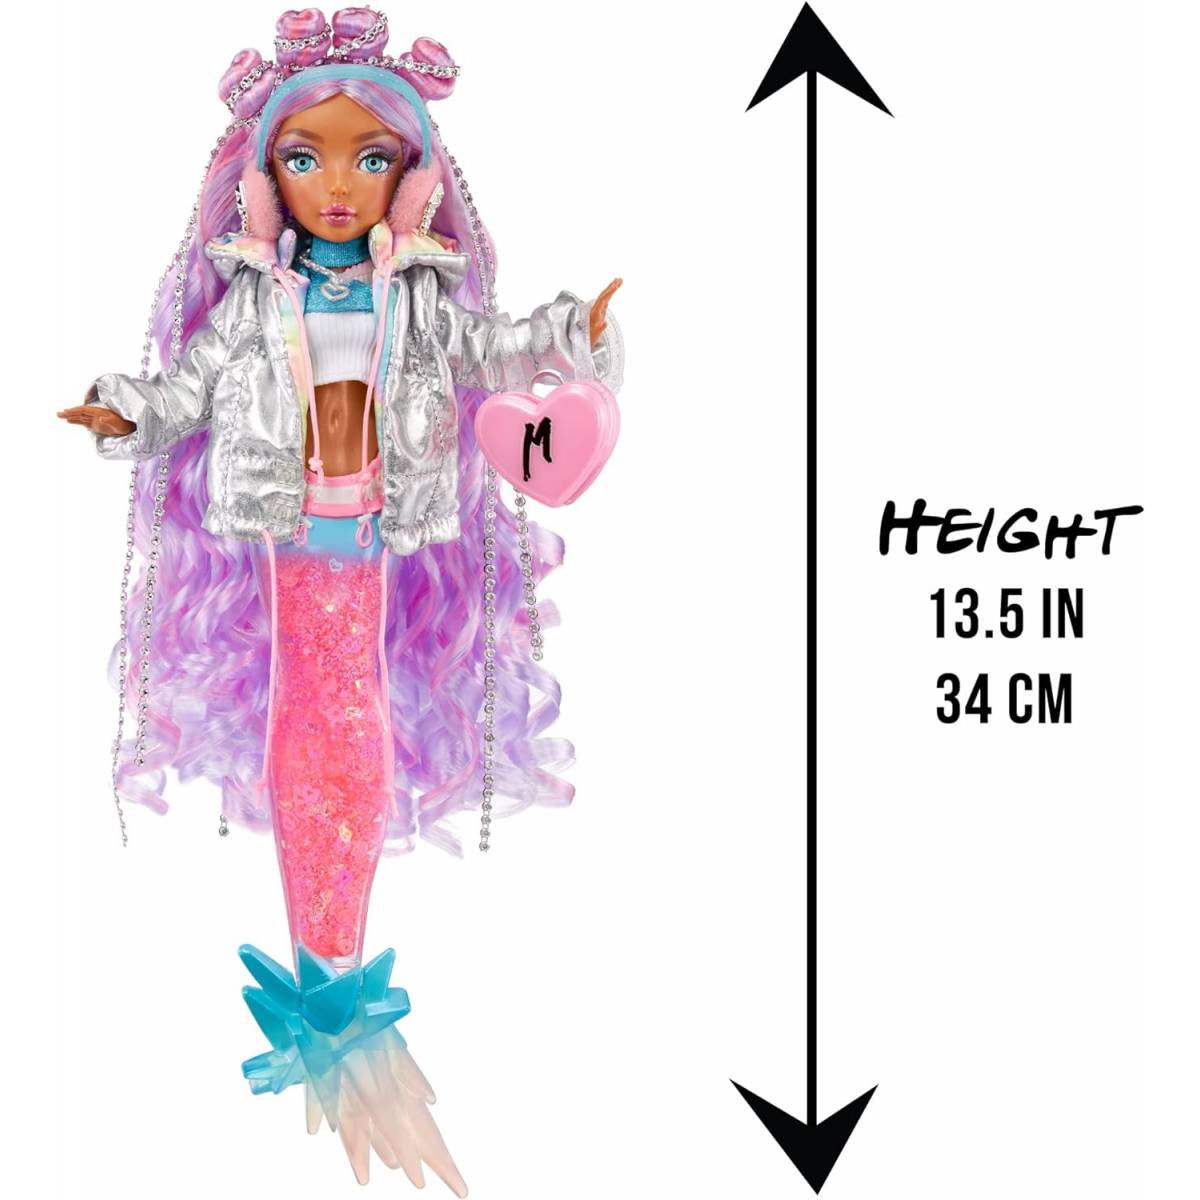 Mermaze Mermaidz Winter Waves - HARMONIQUE Mermaid Fashion Doll